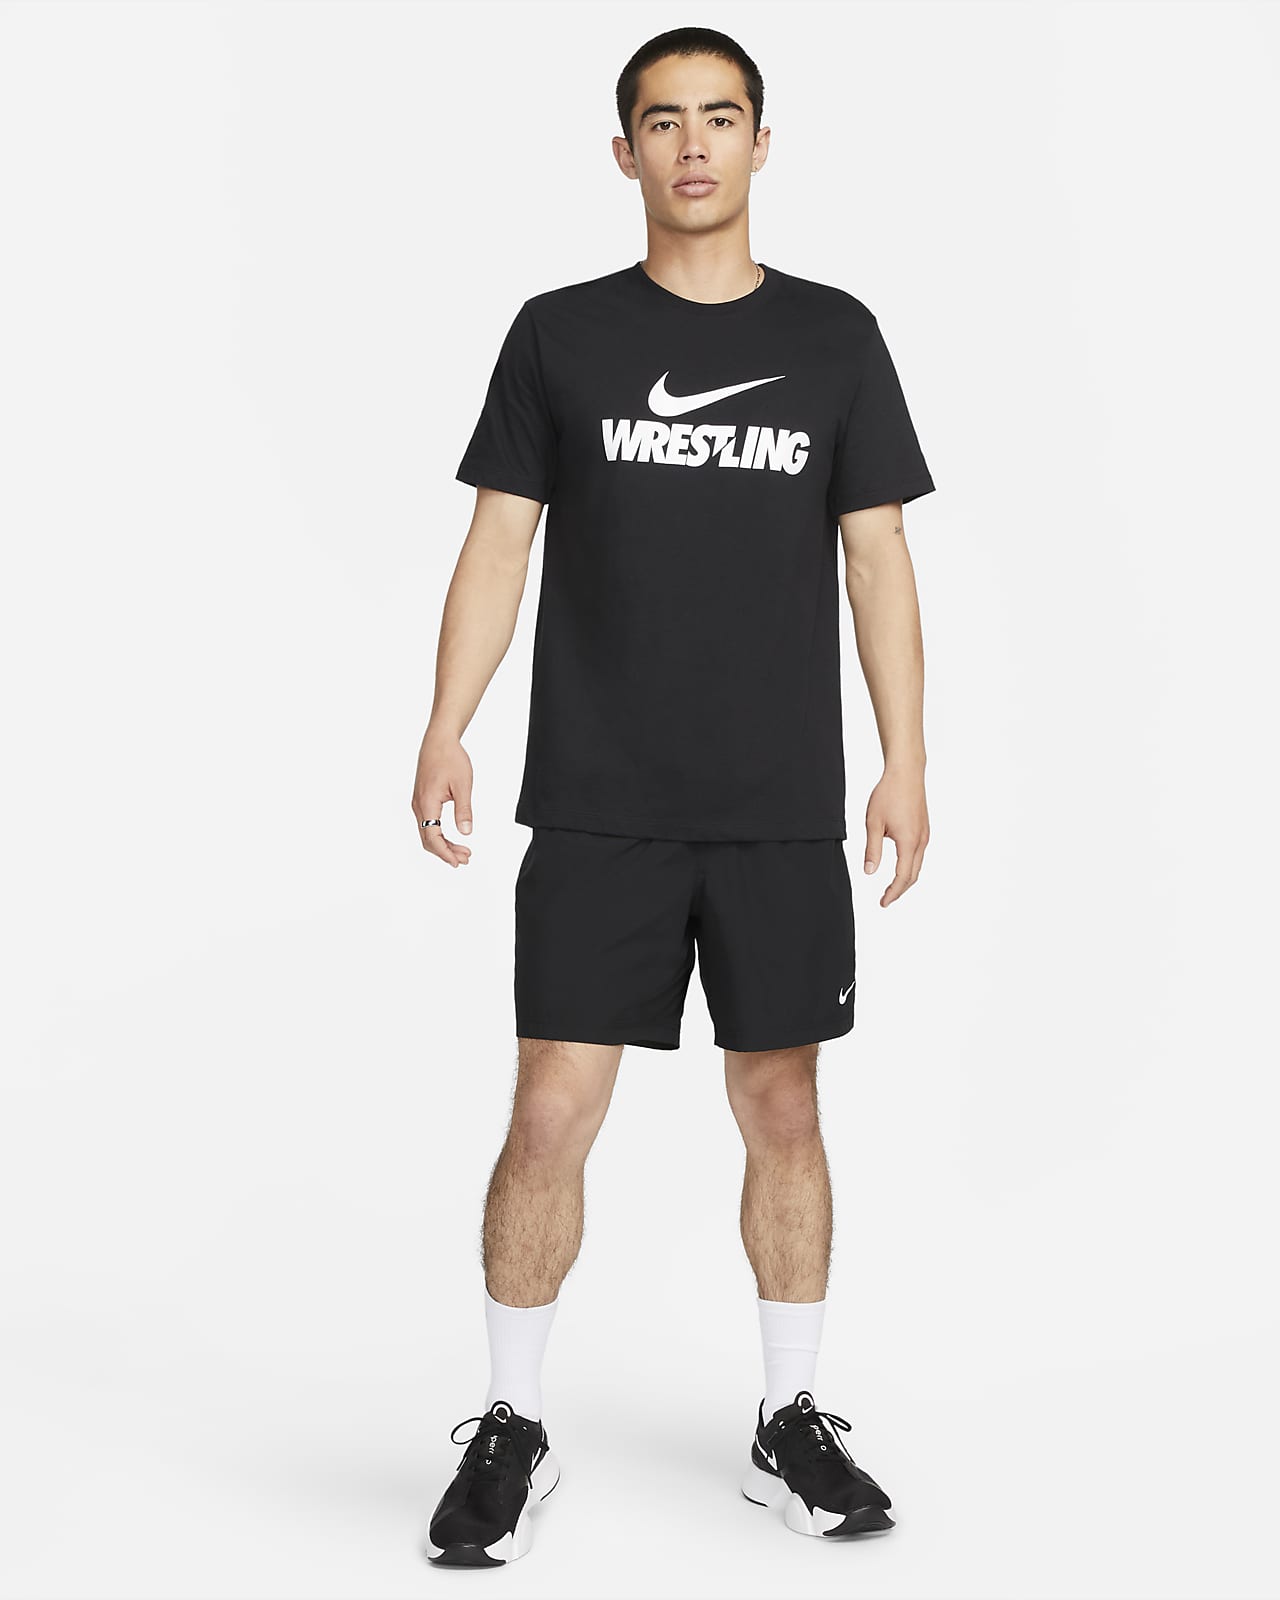 Nike Wrestling Men's T-Shirt. Nike.com